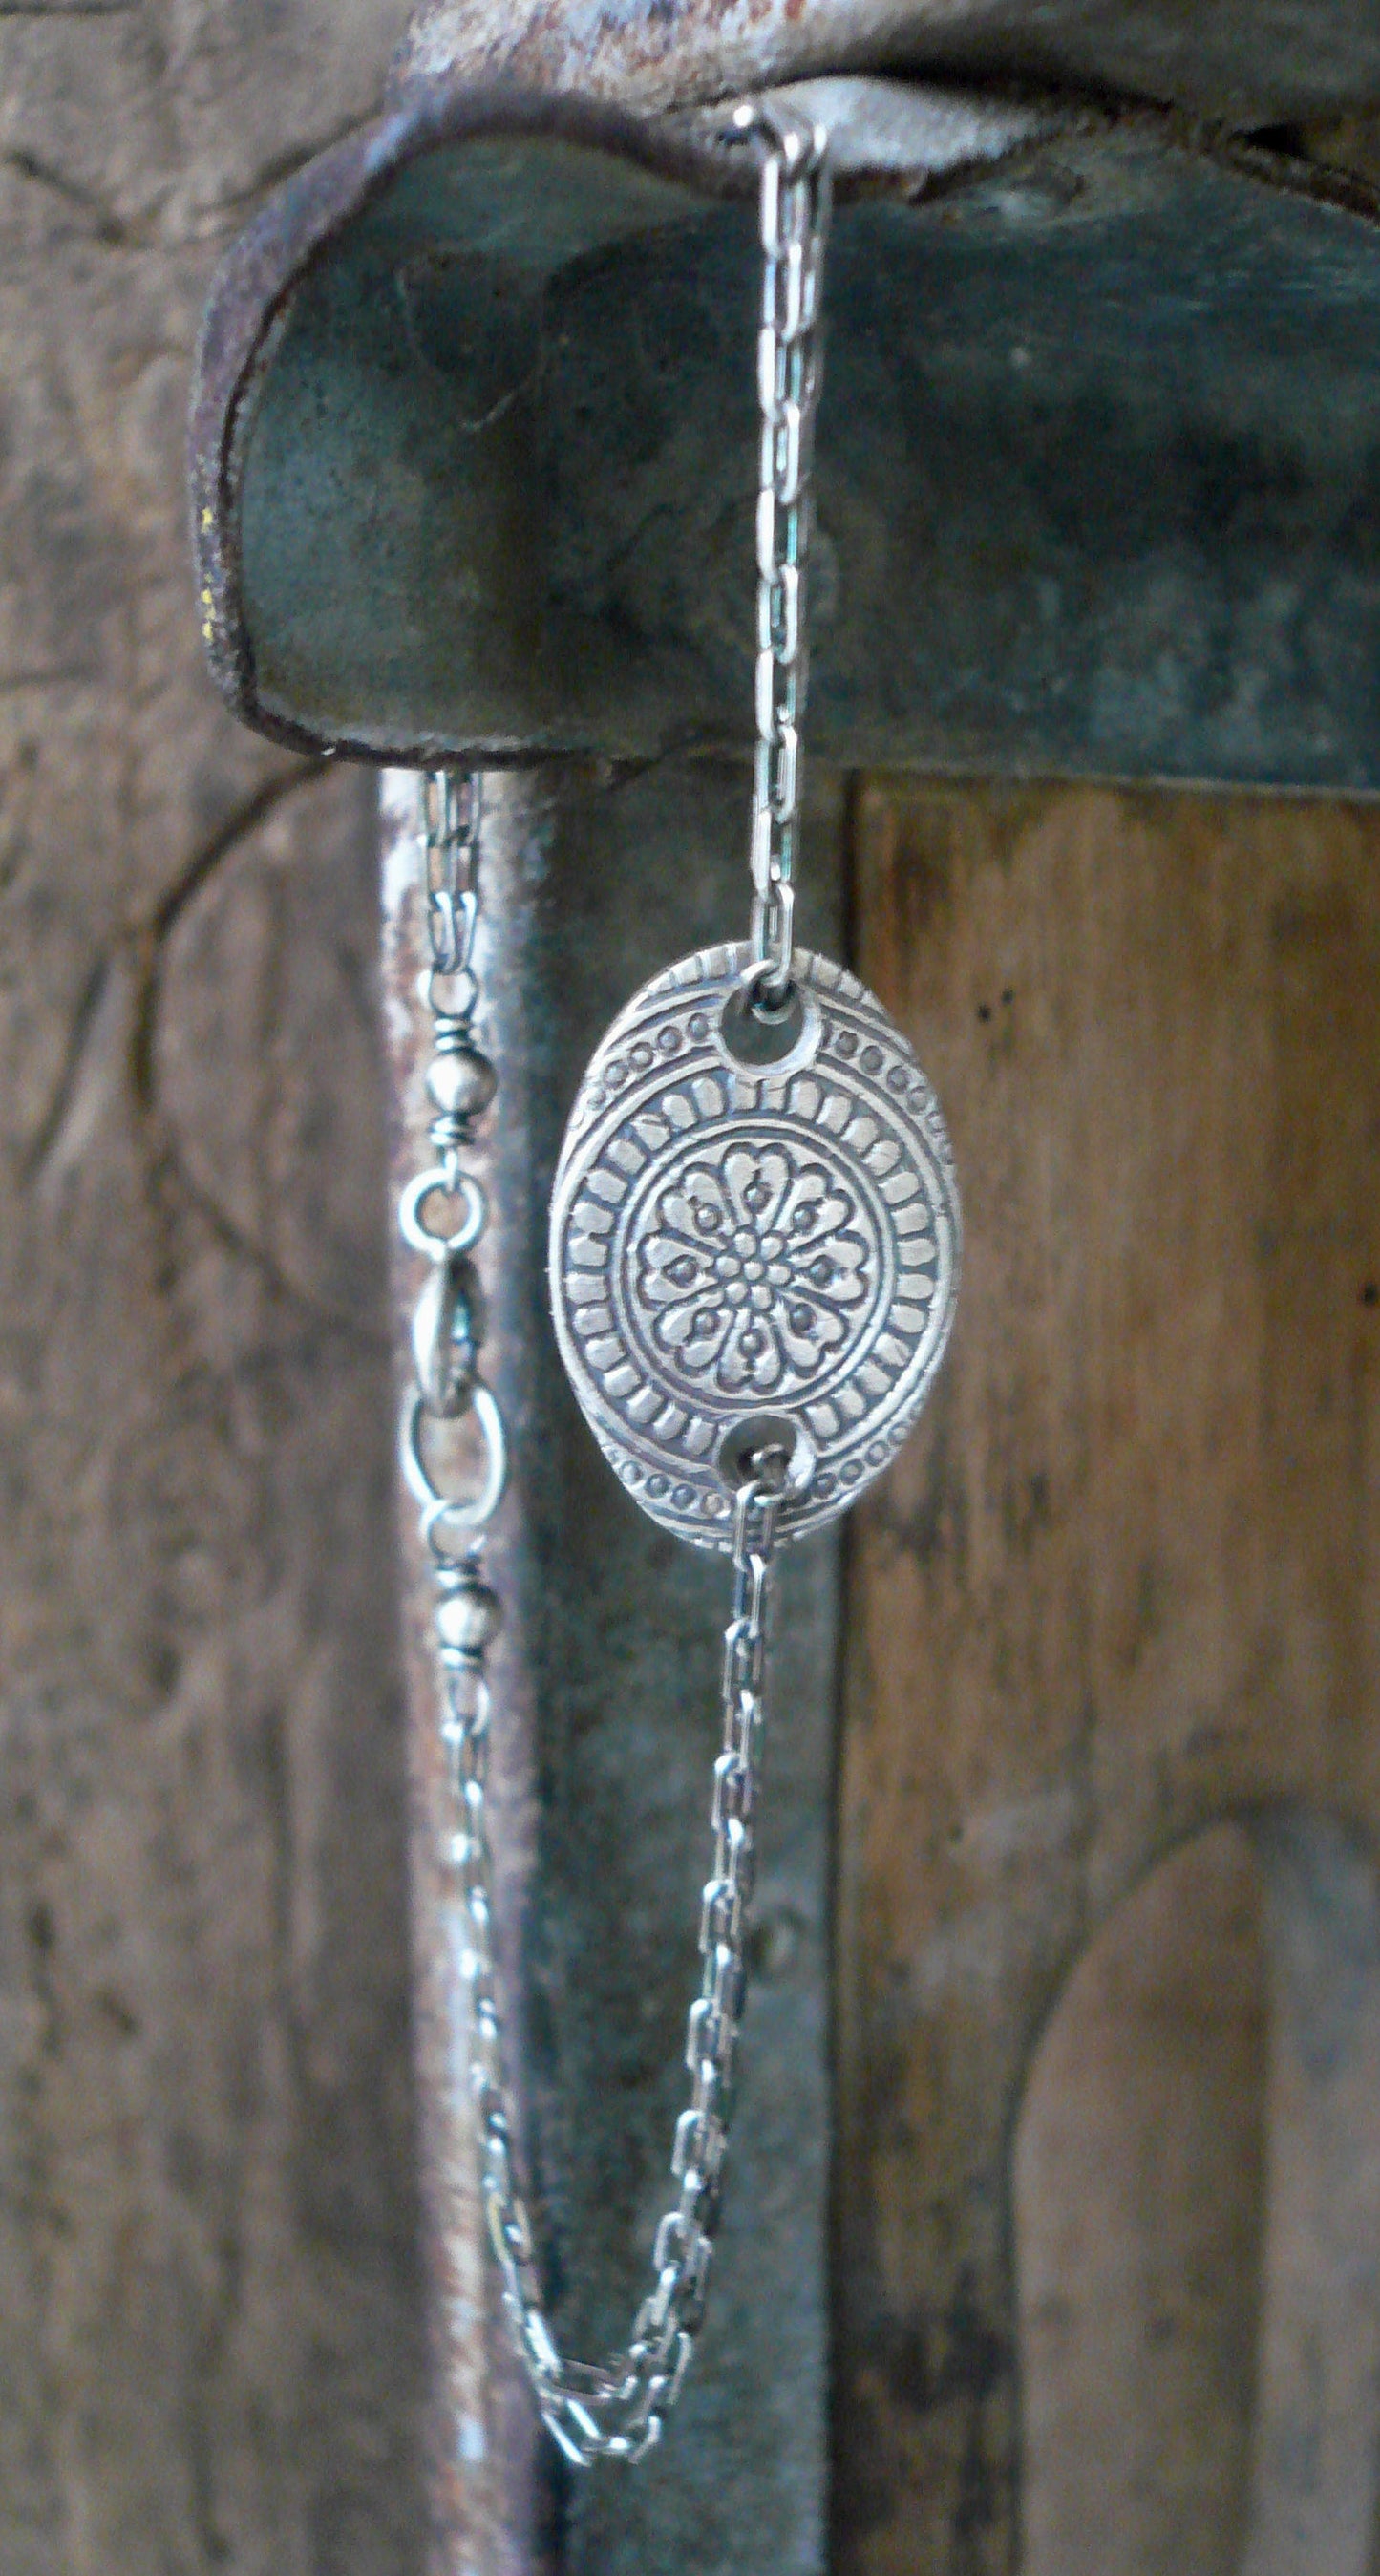 Mandala Bracelet- Oxidized fine and sterling silver. Handmade